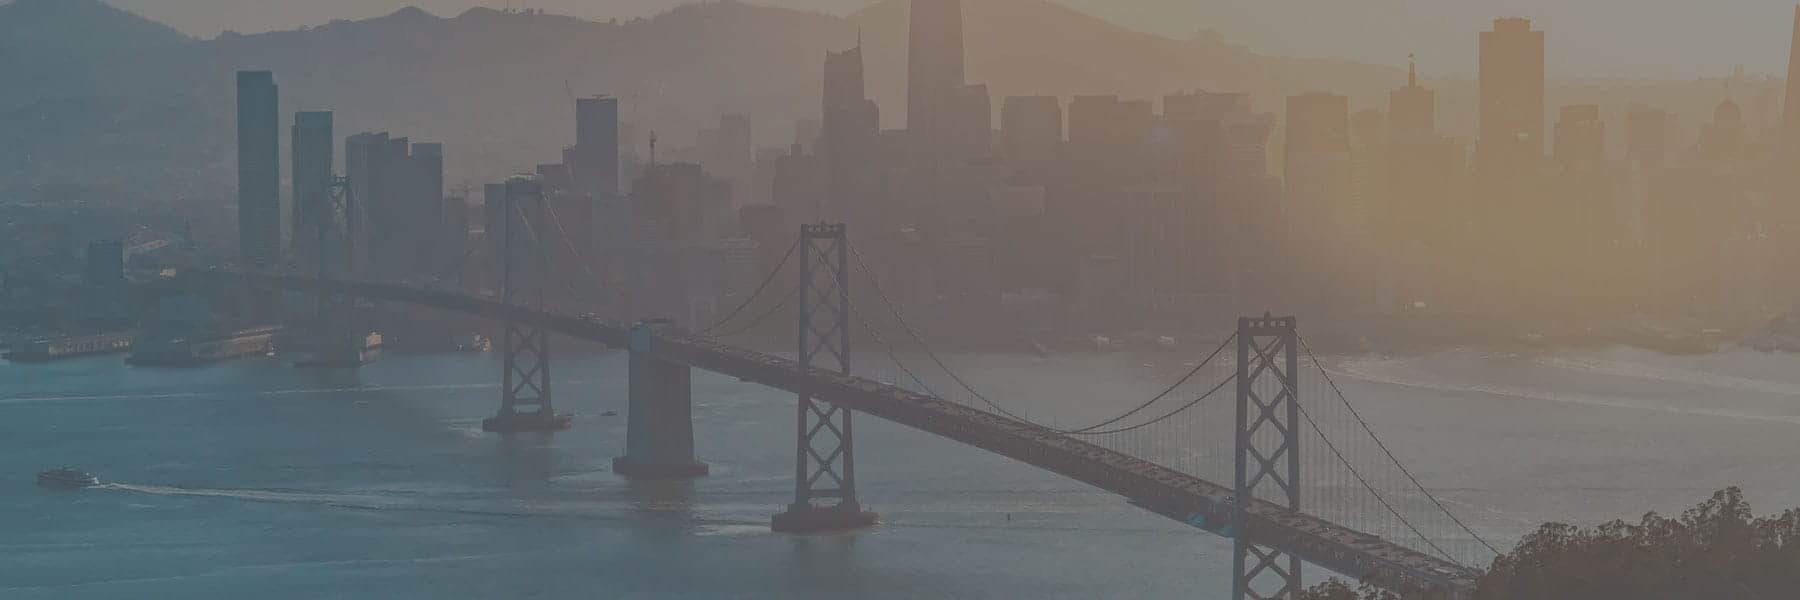 San Francisco Bay bridge and city skyline